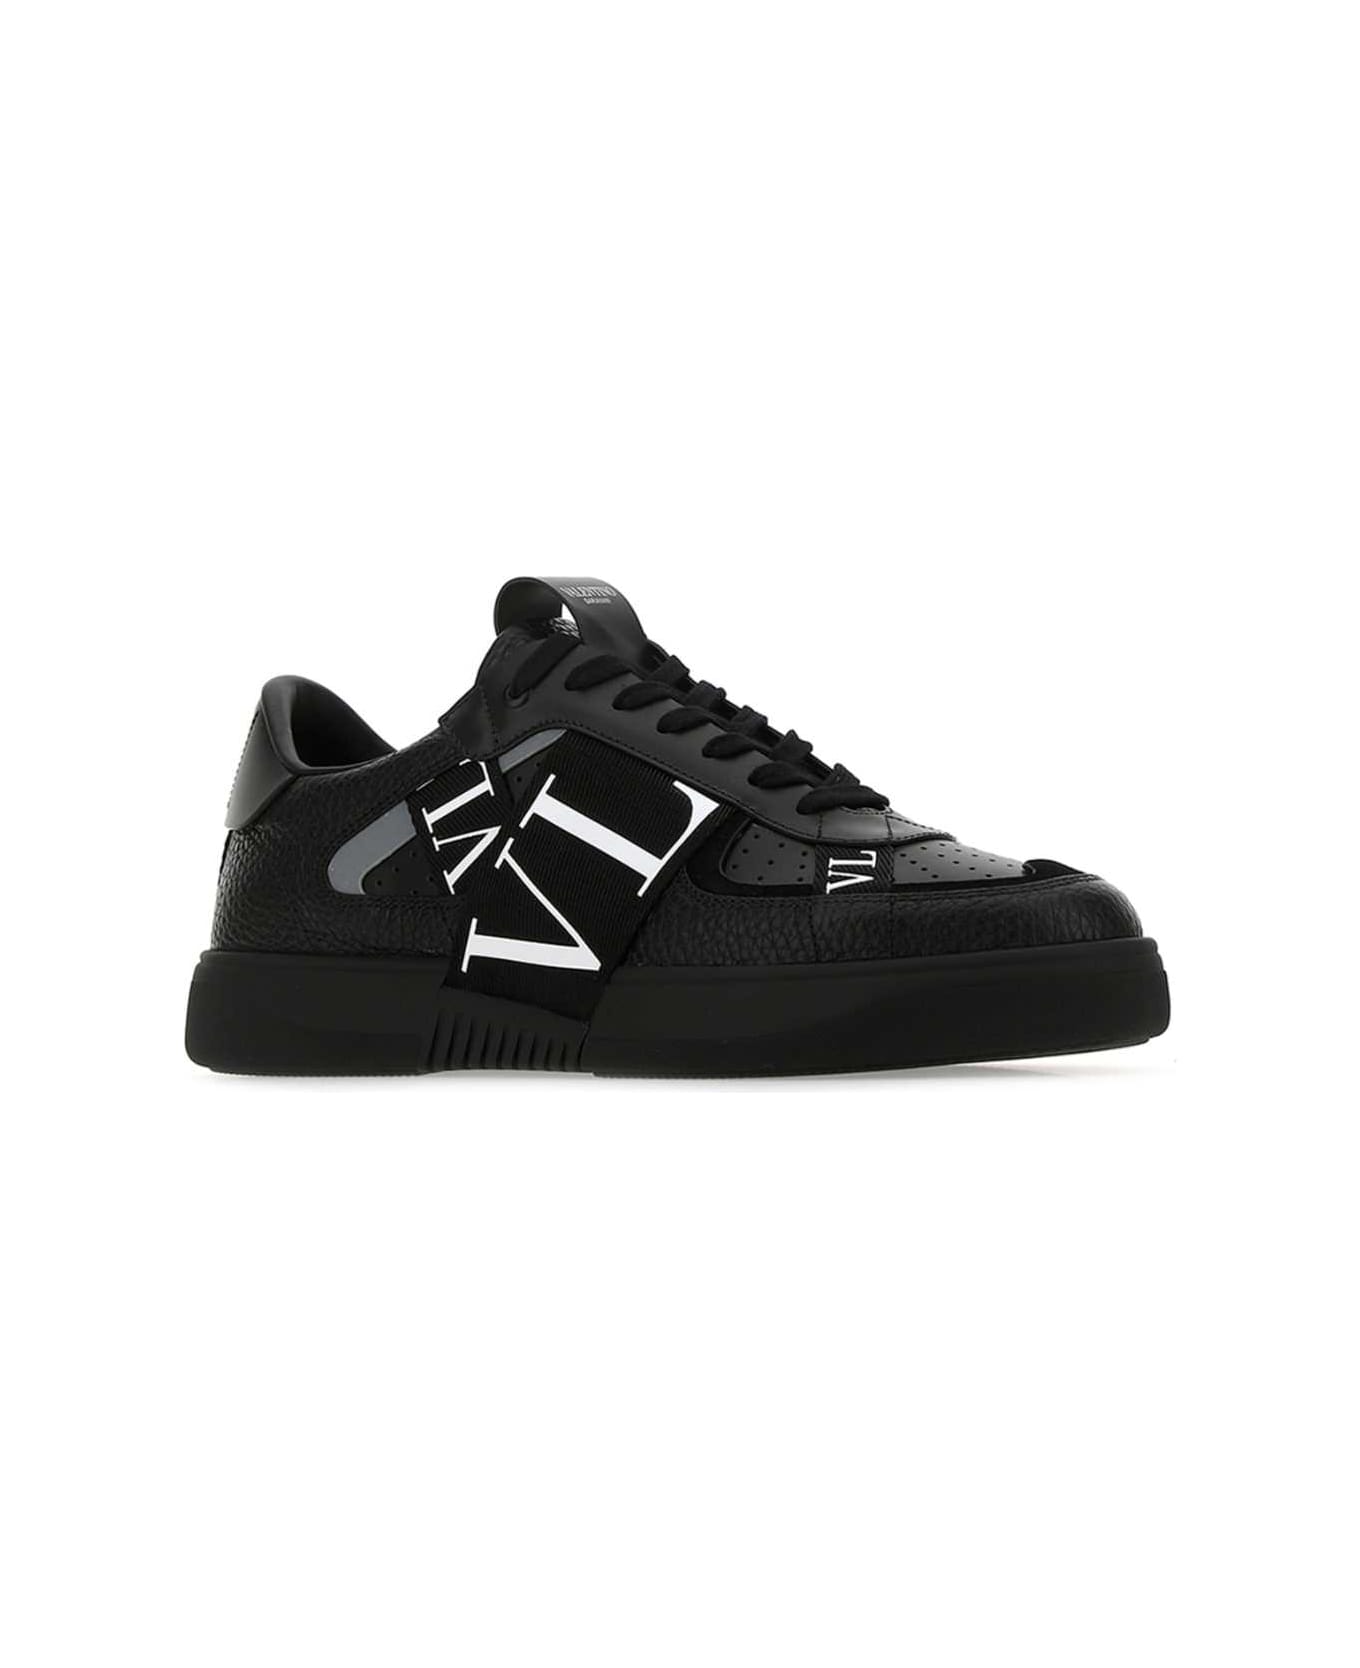 Valentino Garavani Black Leather Vl7n Sneakers - NERONEROBIANERONERONERONERO